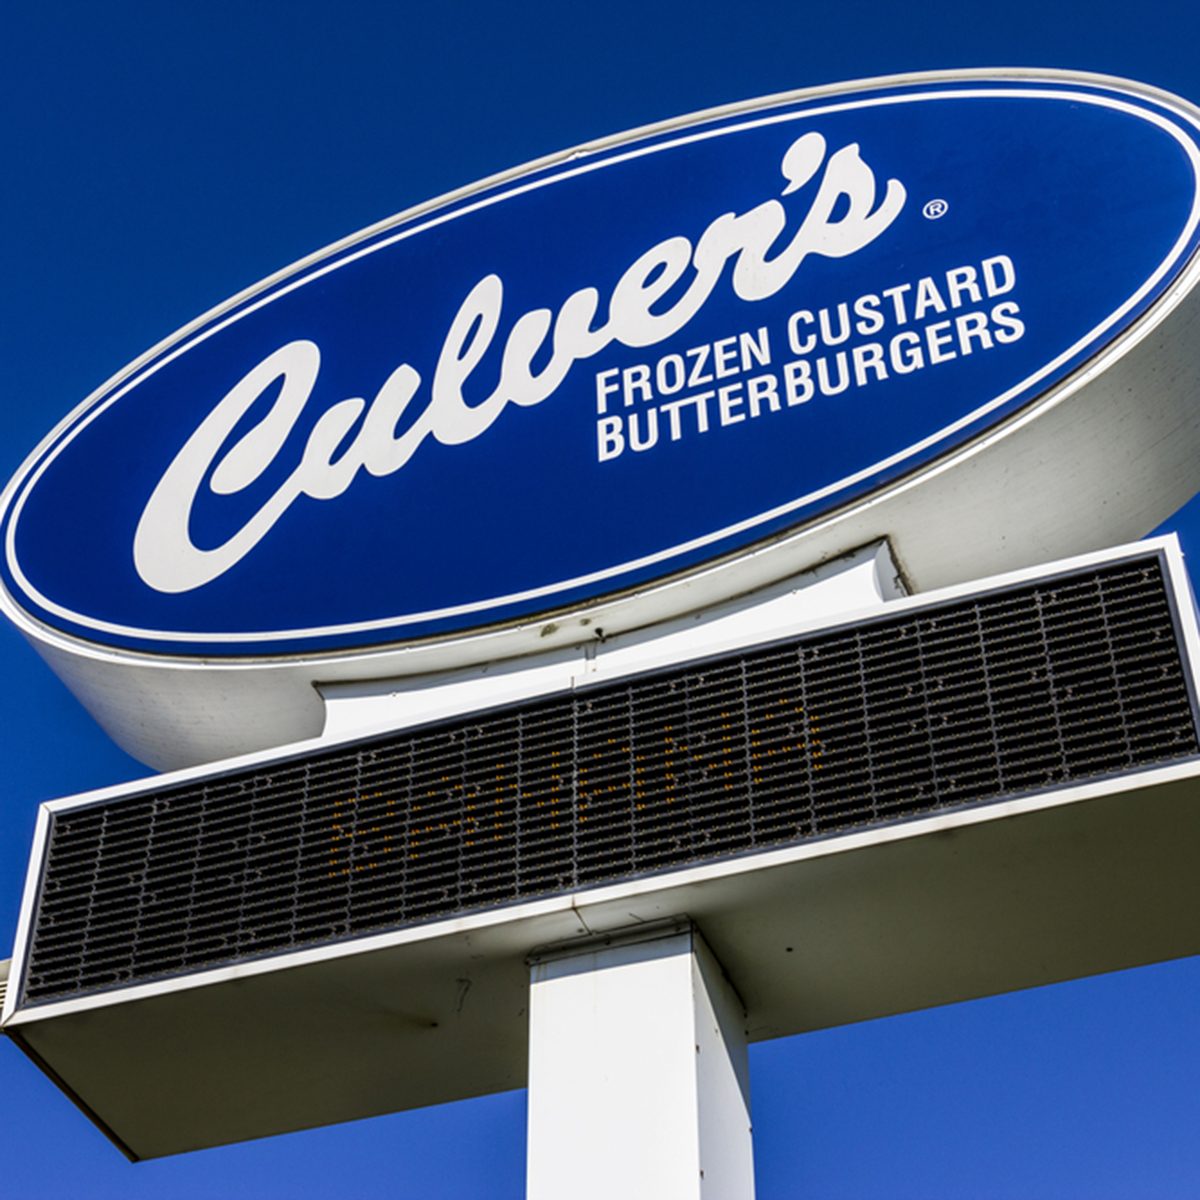 Culver's sign